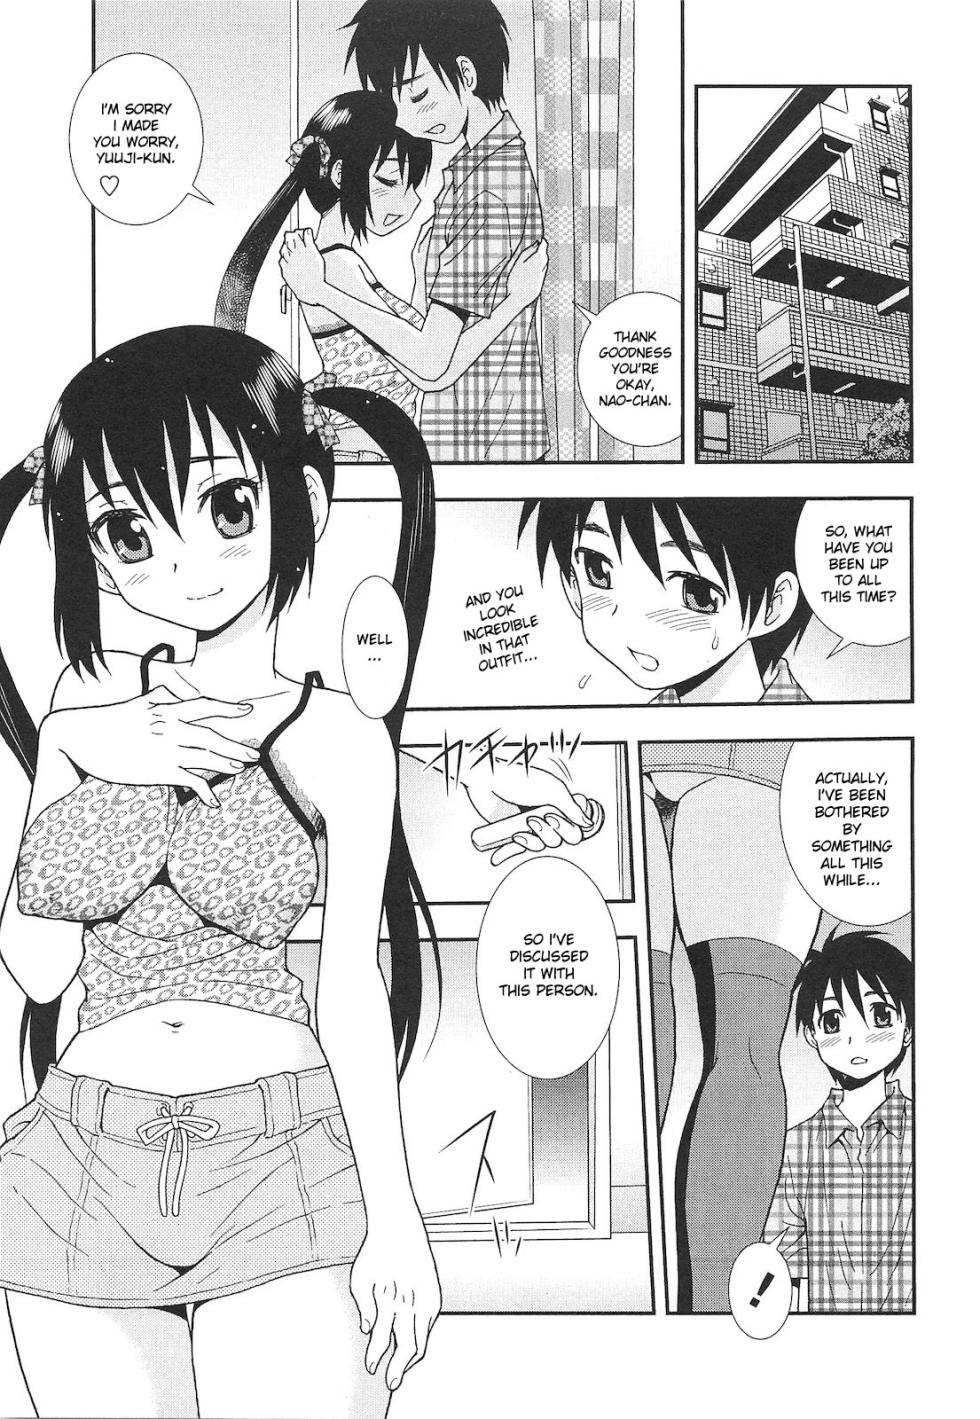 A Lovely Scenery [Shinozaki Rei] - Page 5